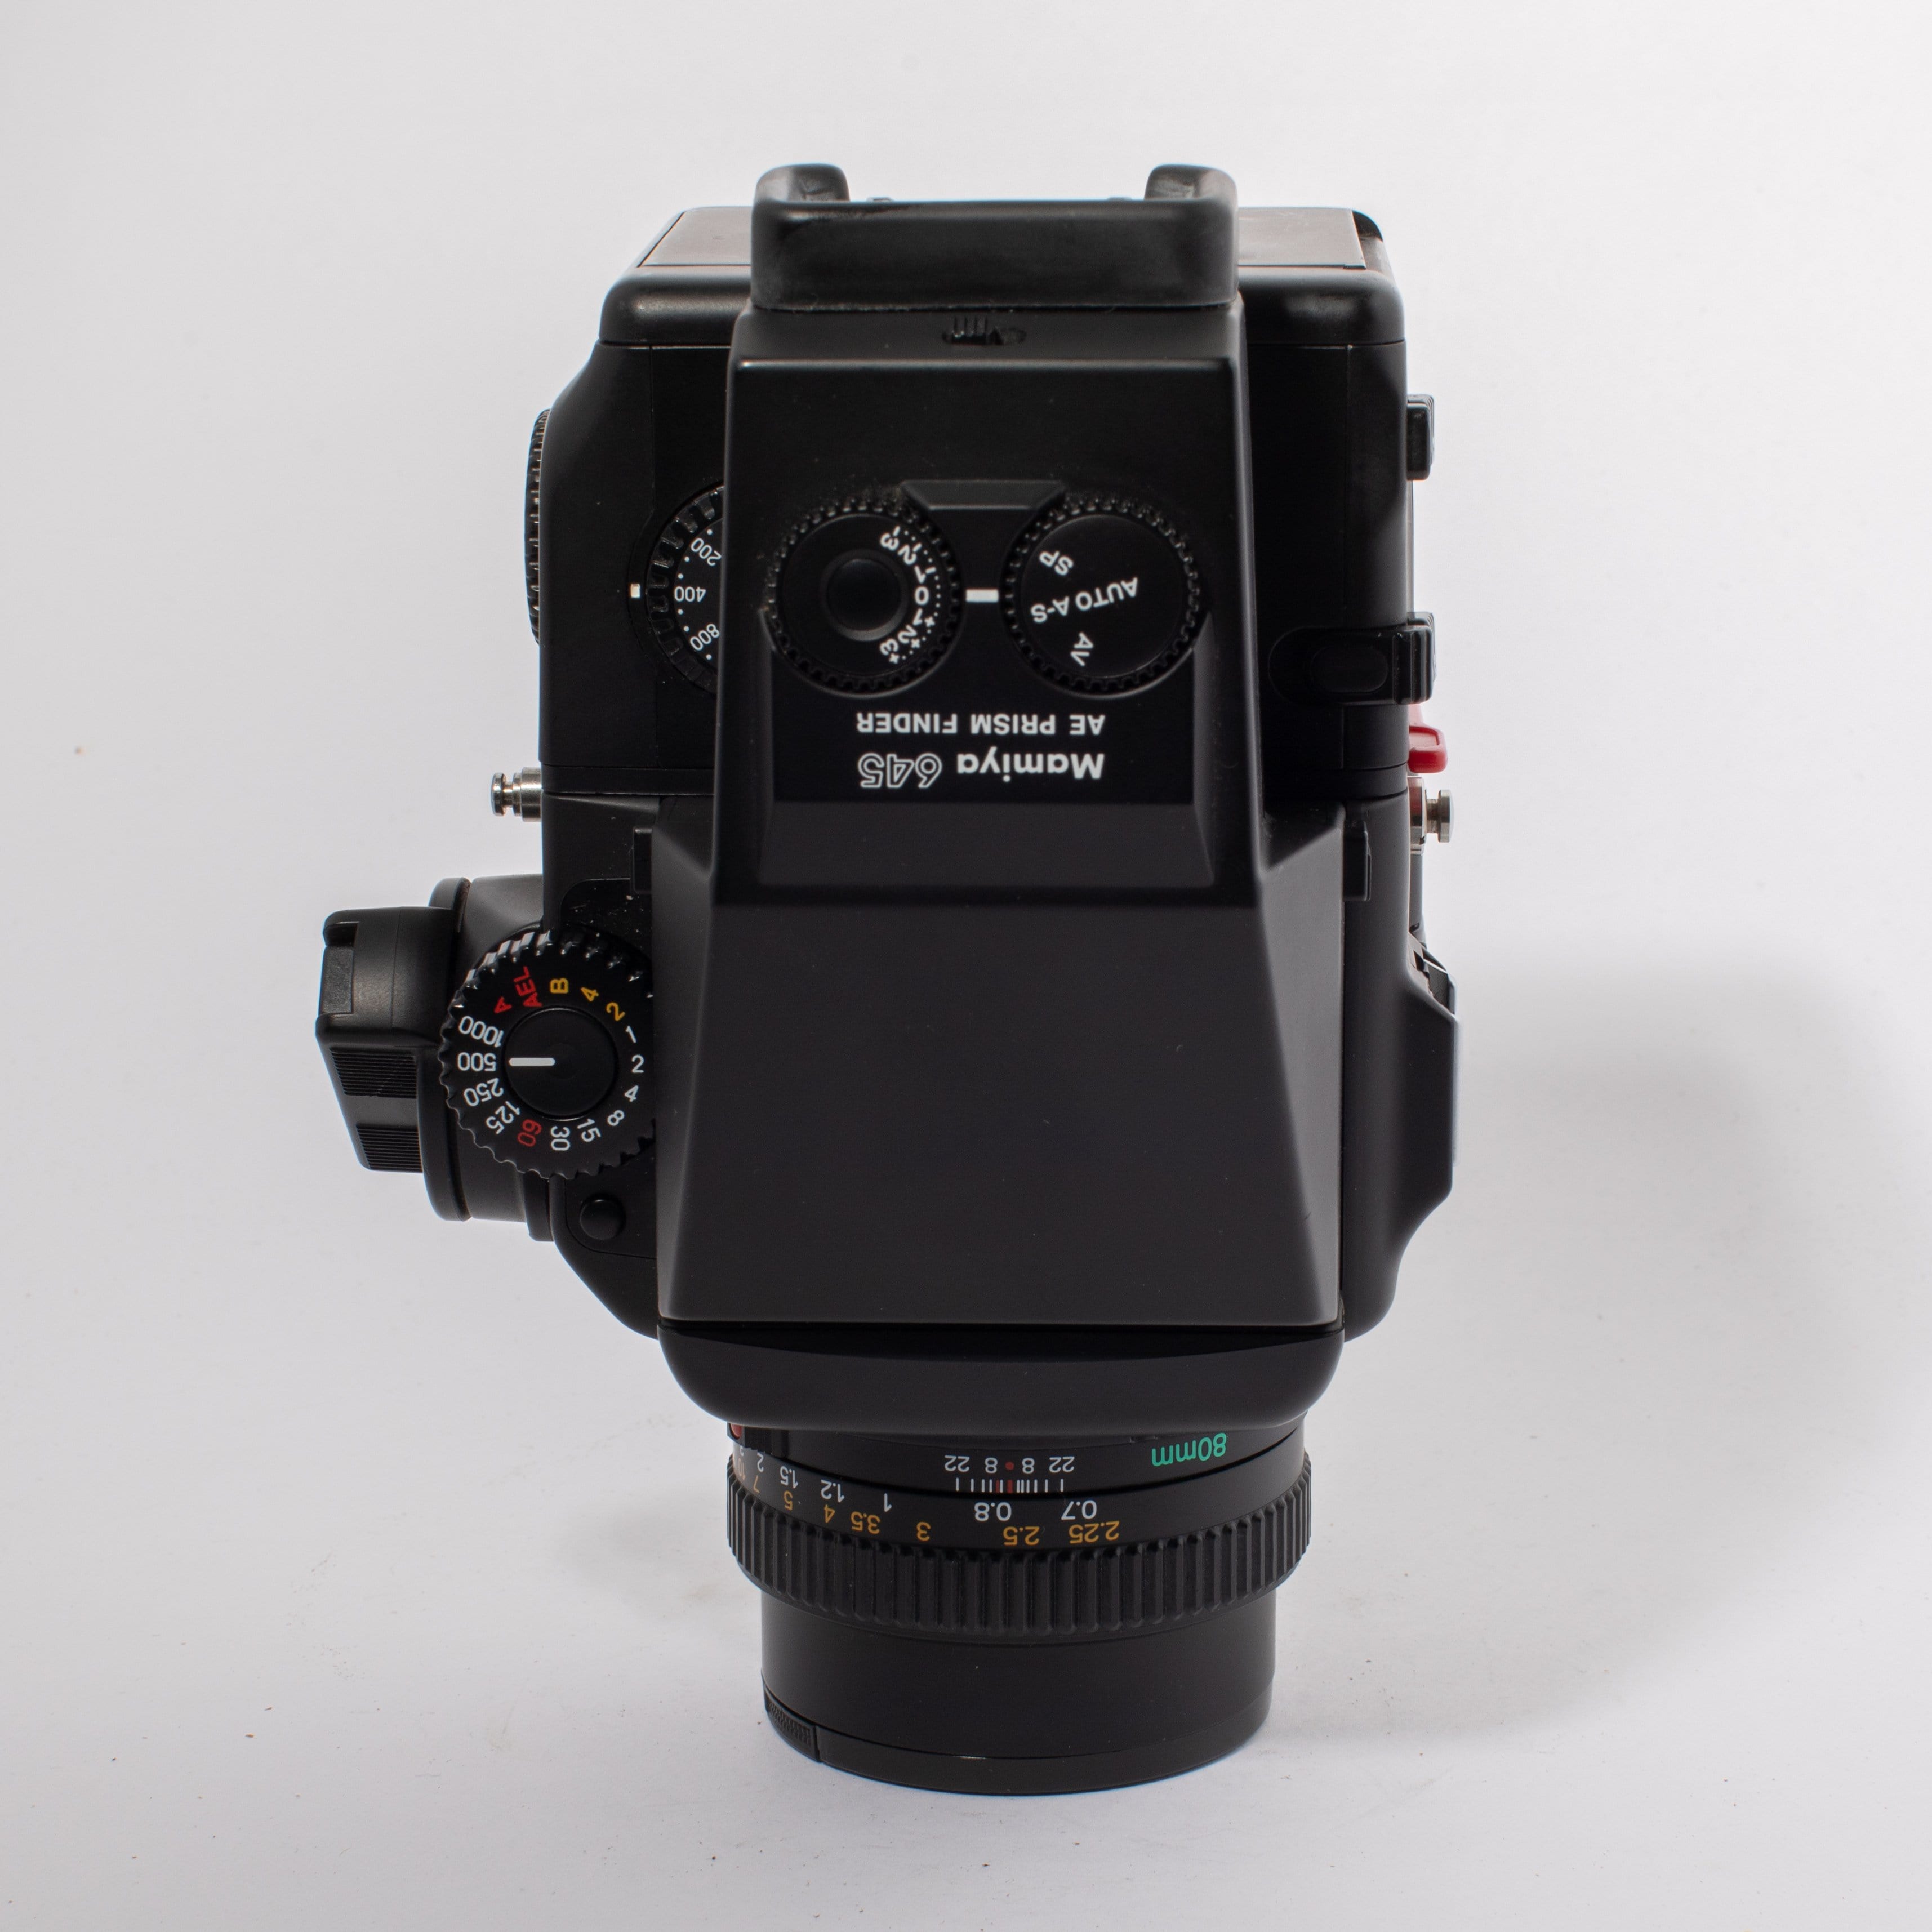 Mamiya 645 Pro with Mamiya-Sekor 80mm f/2.8 - FRESH CLA – Film 